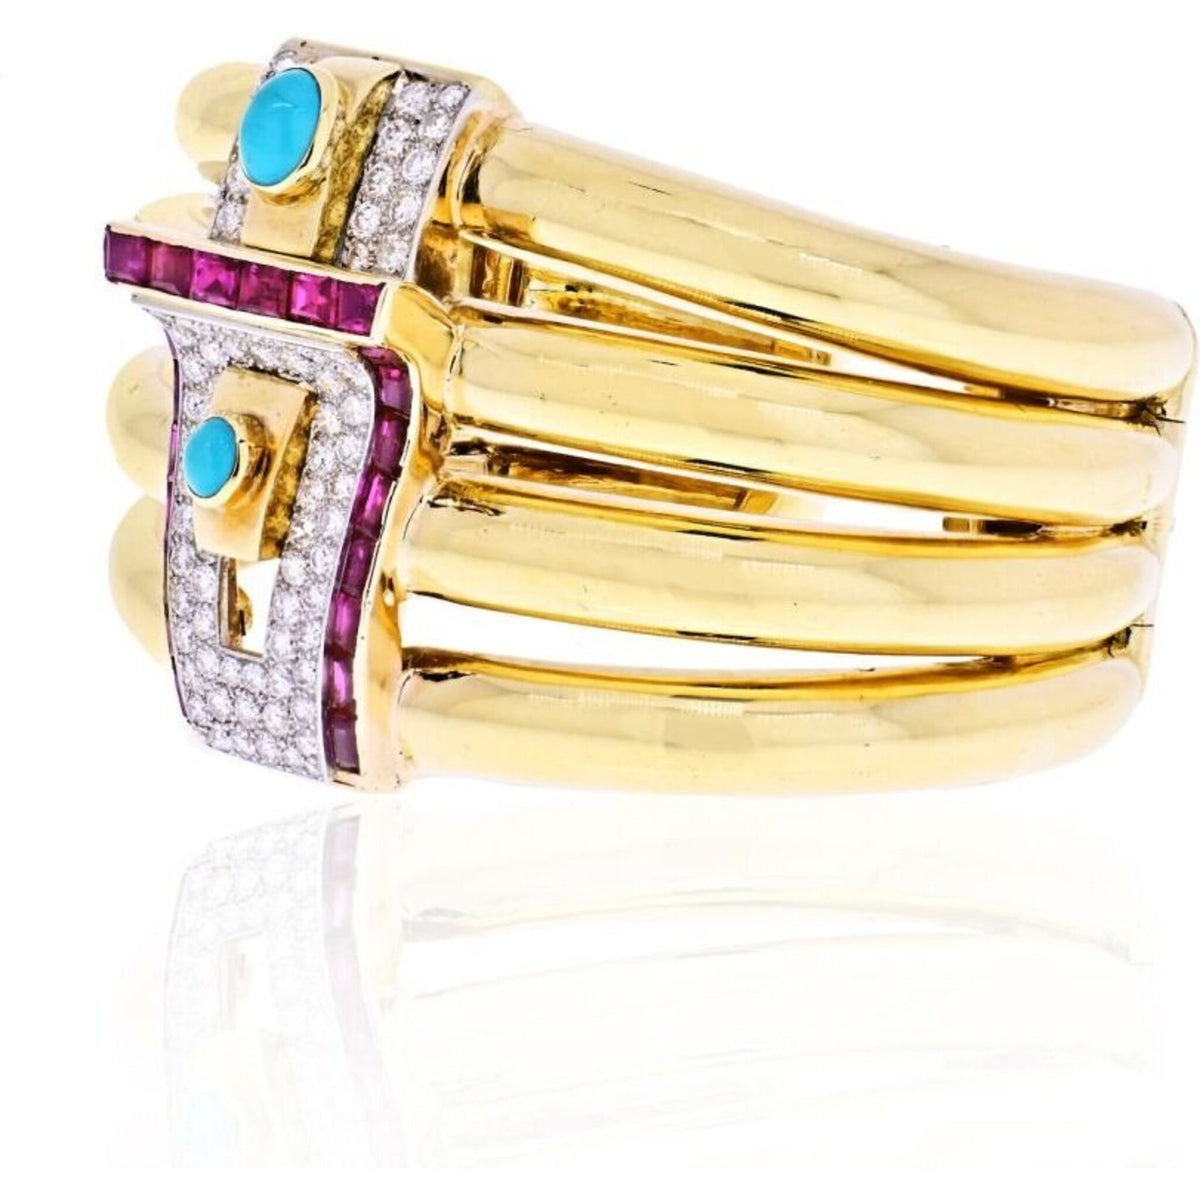 Exquisite David Webb Platinum and 18K Yellow Gold Diamond, Ruby, and Turquoise Bangle Bracelet